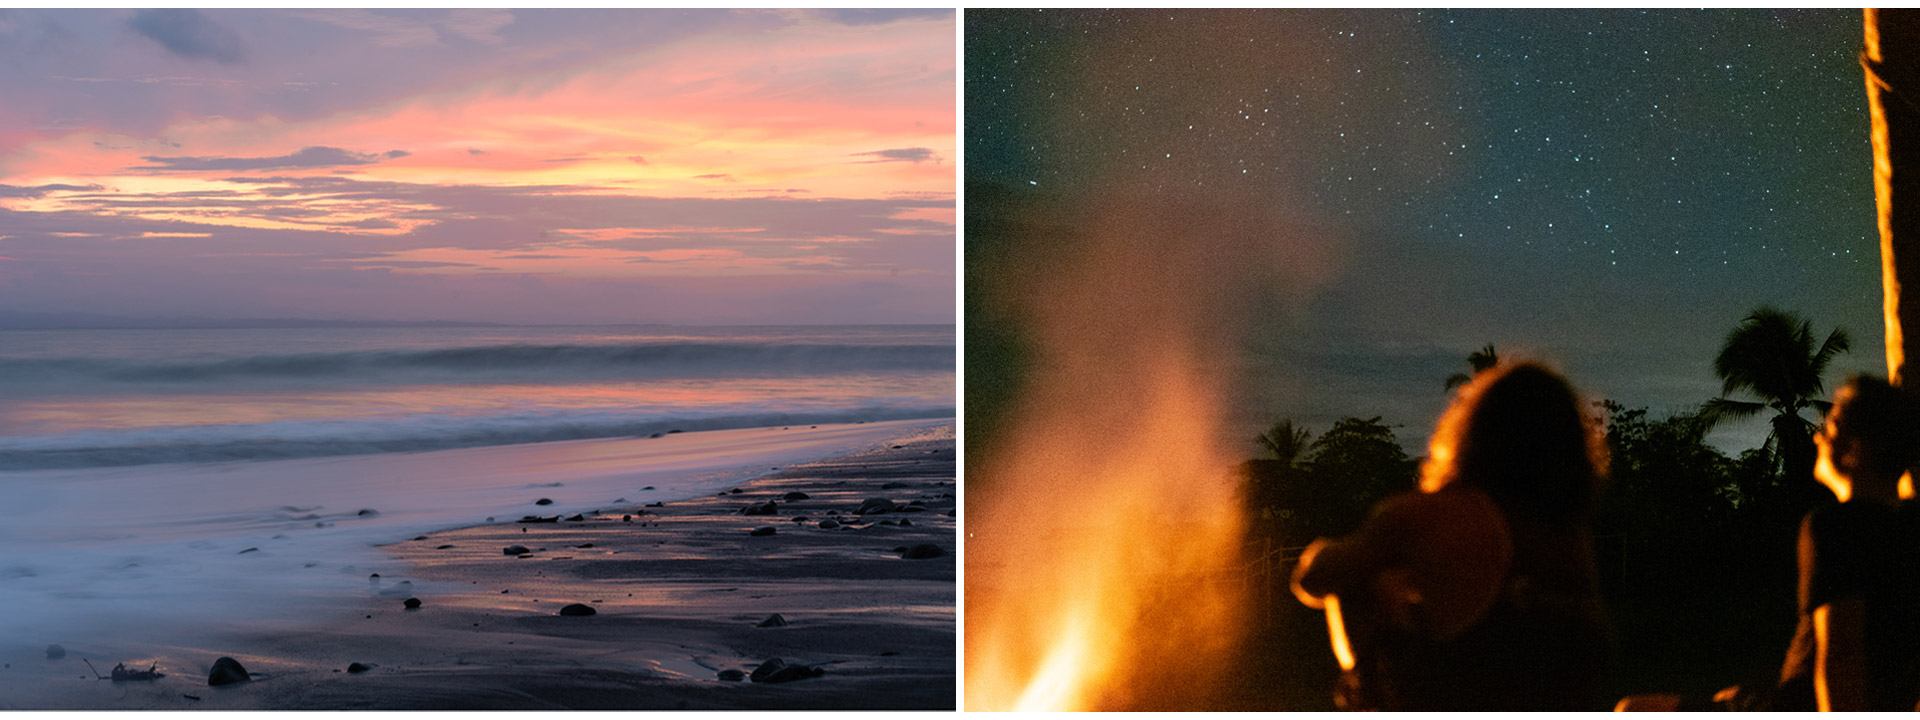 costa-rica-sunset-bonfire